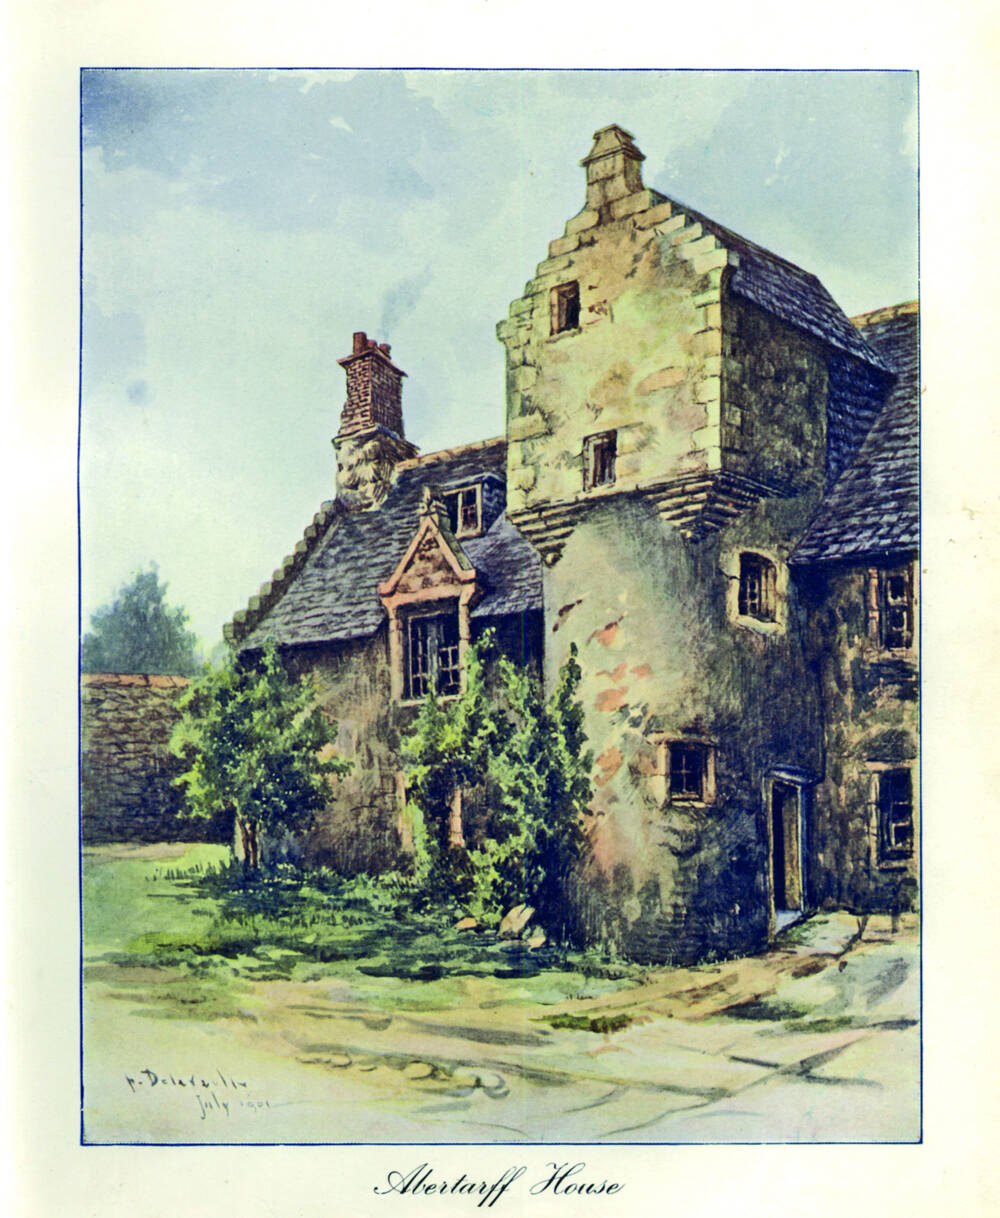 A 1903 illustration of Abertarff House